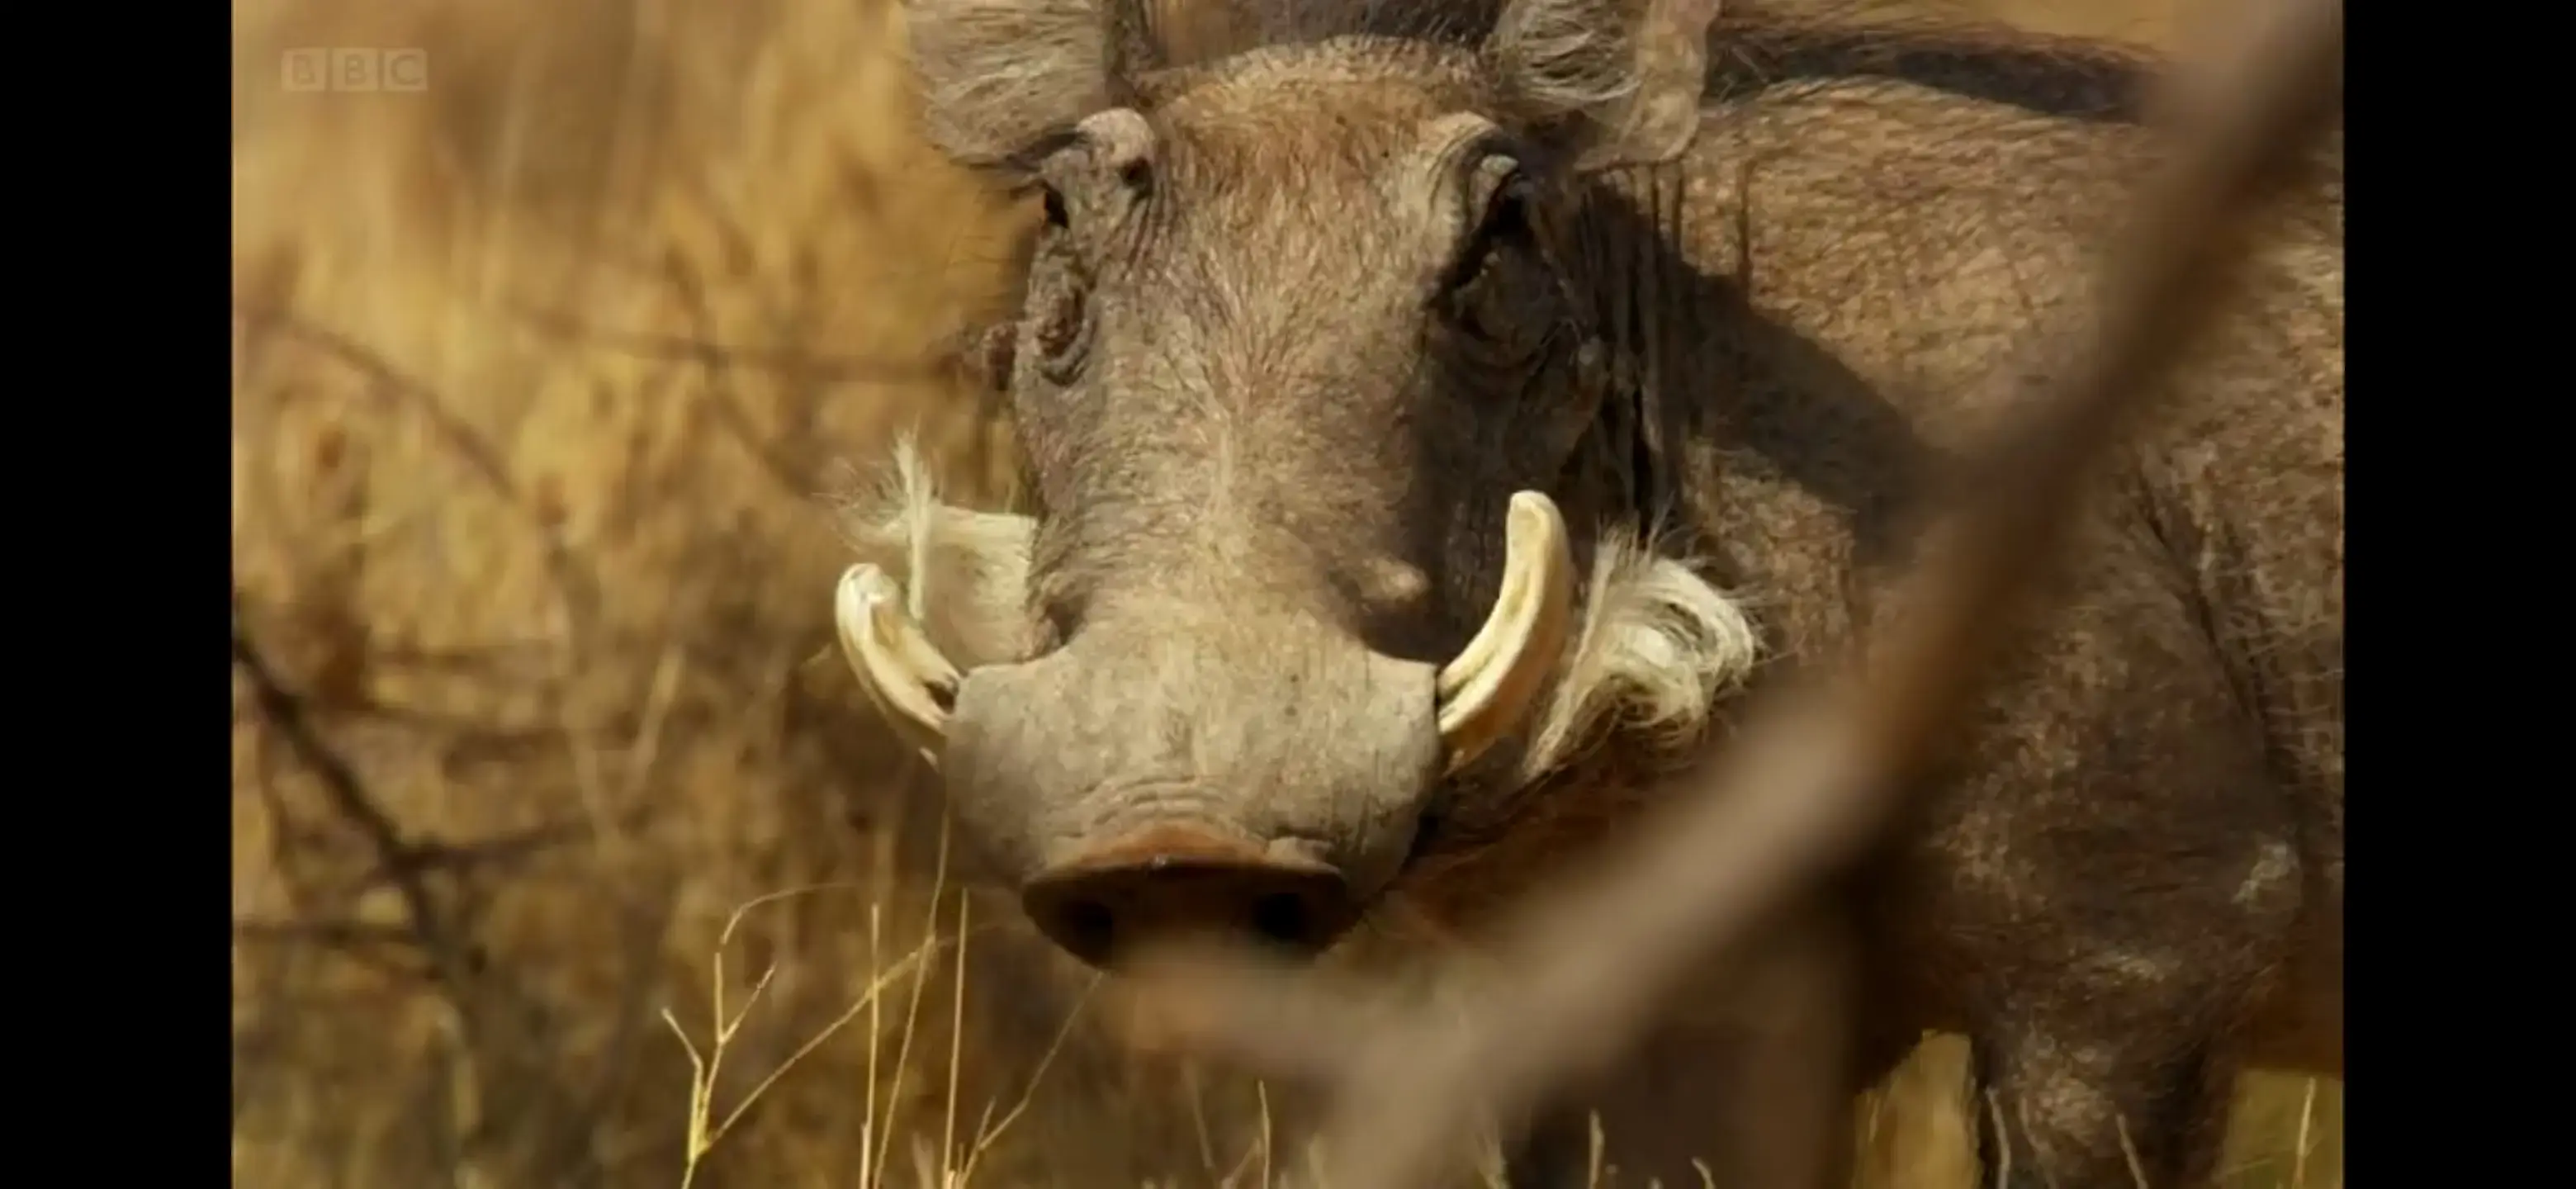 Southern warthog (Phacochoerus africanus sundevallii) as shown in Africa - Kalahari